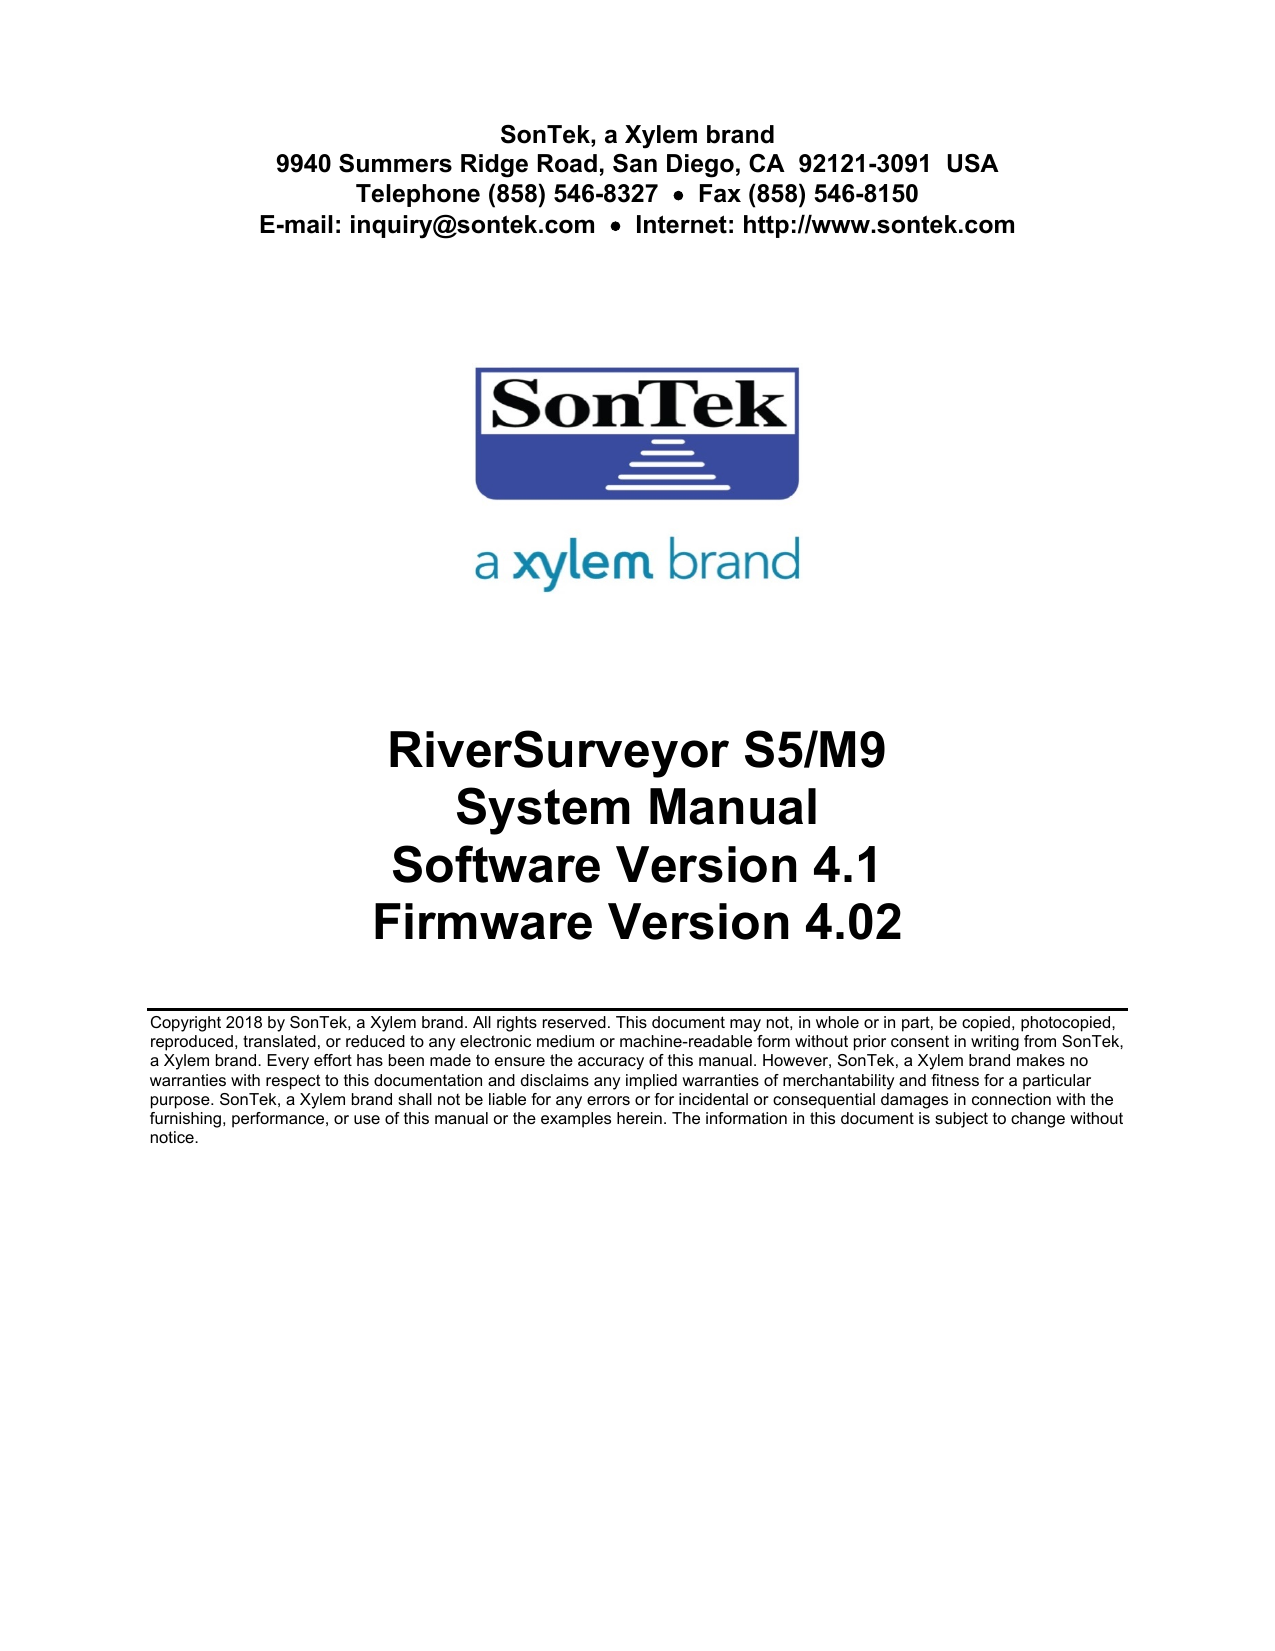 RiverSurveyor S5/M9 Manual do Sistema (tradução) Firmware